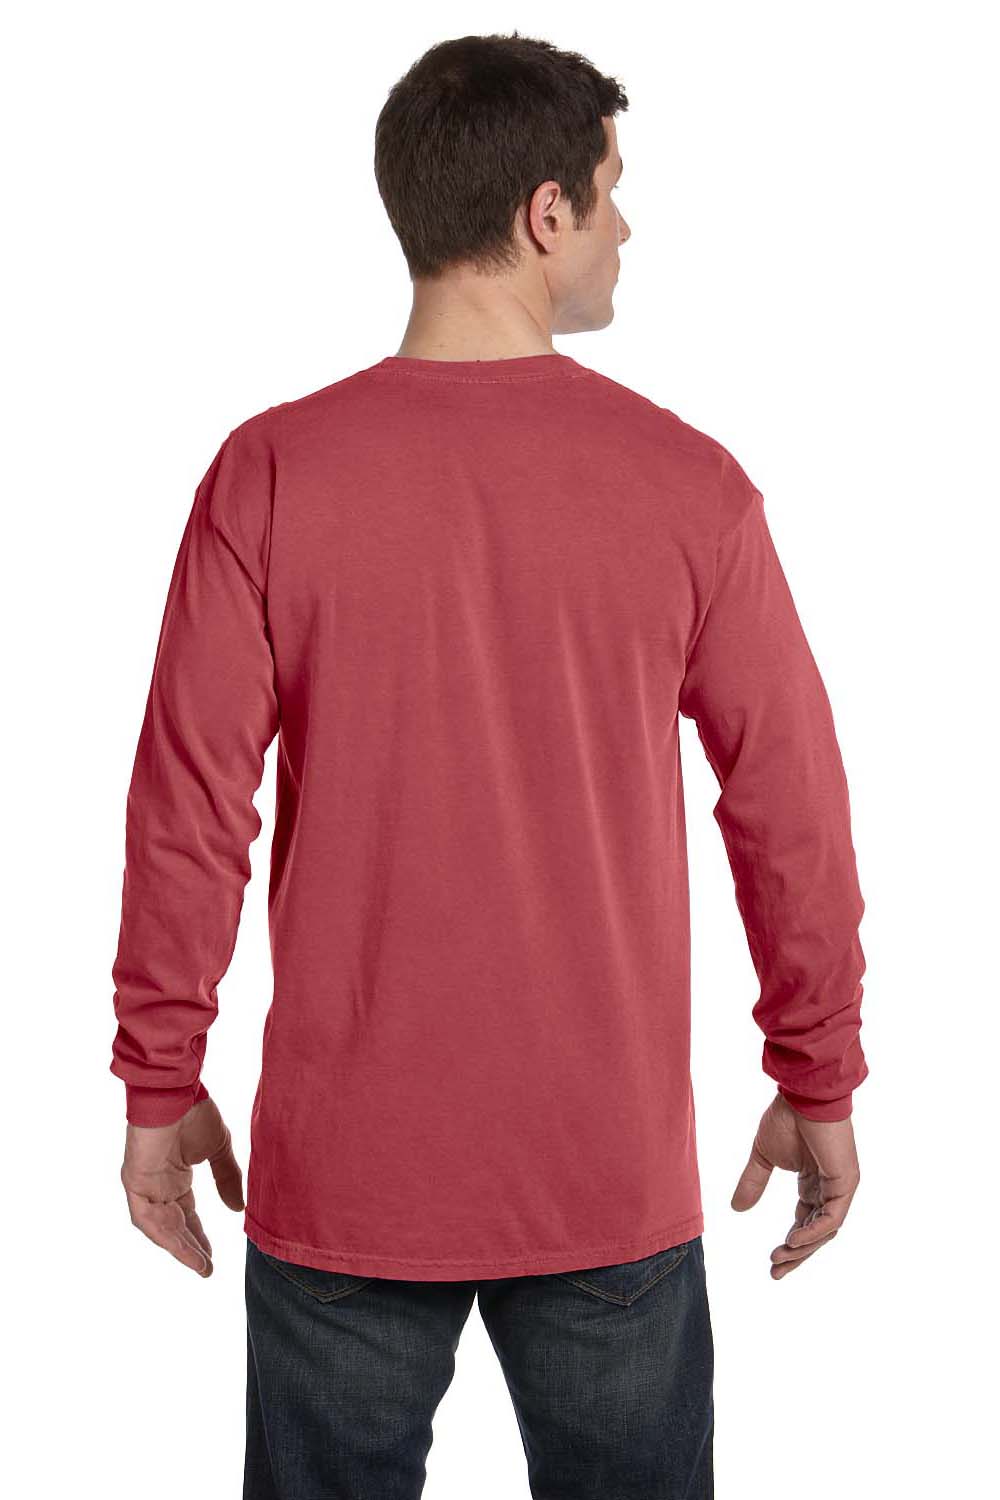 Comfort Colors C6014 Mens Long Sleeve Crewneck T-Shirt Brick Red Back